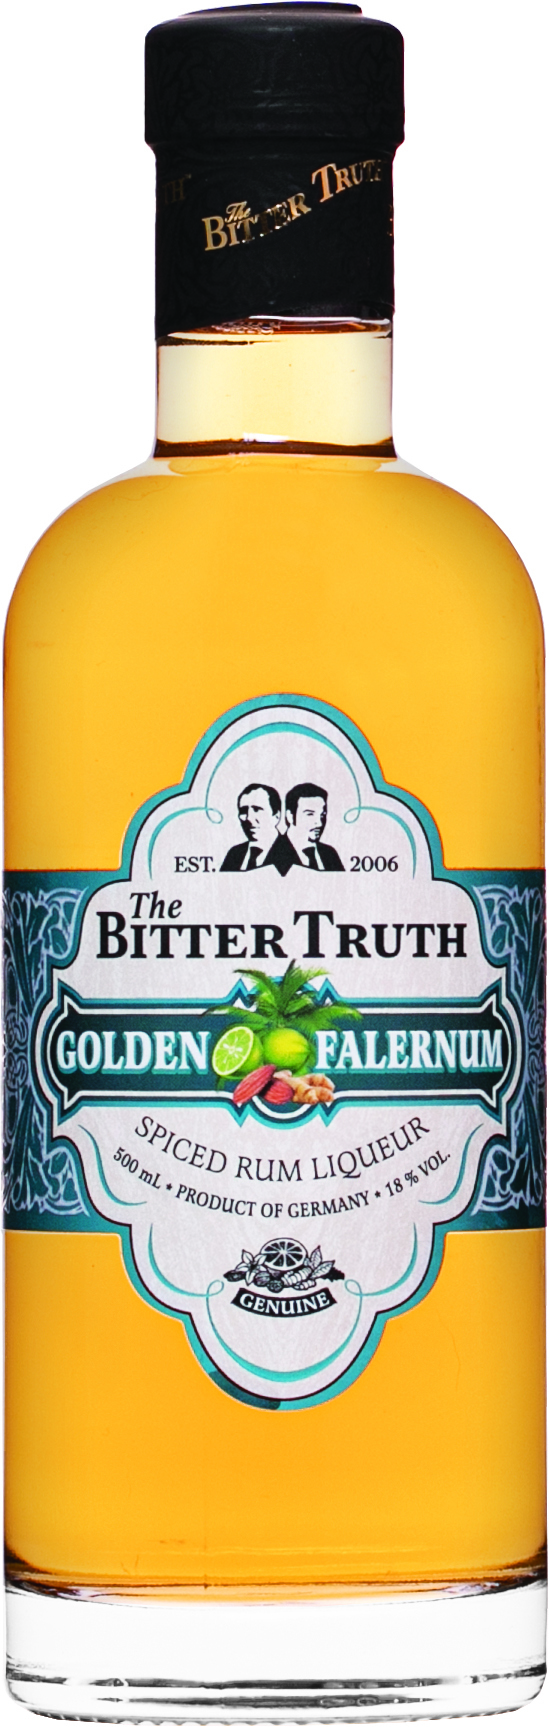 The Bitter Truth Golden Falernum 18% 0,5l